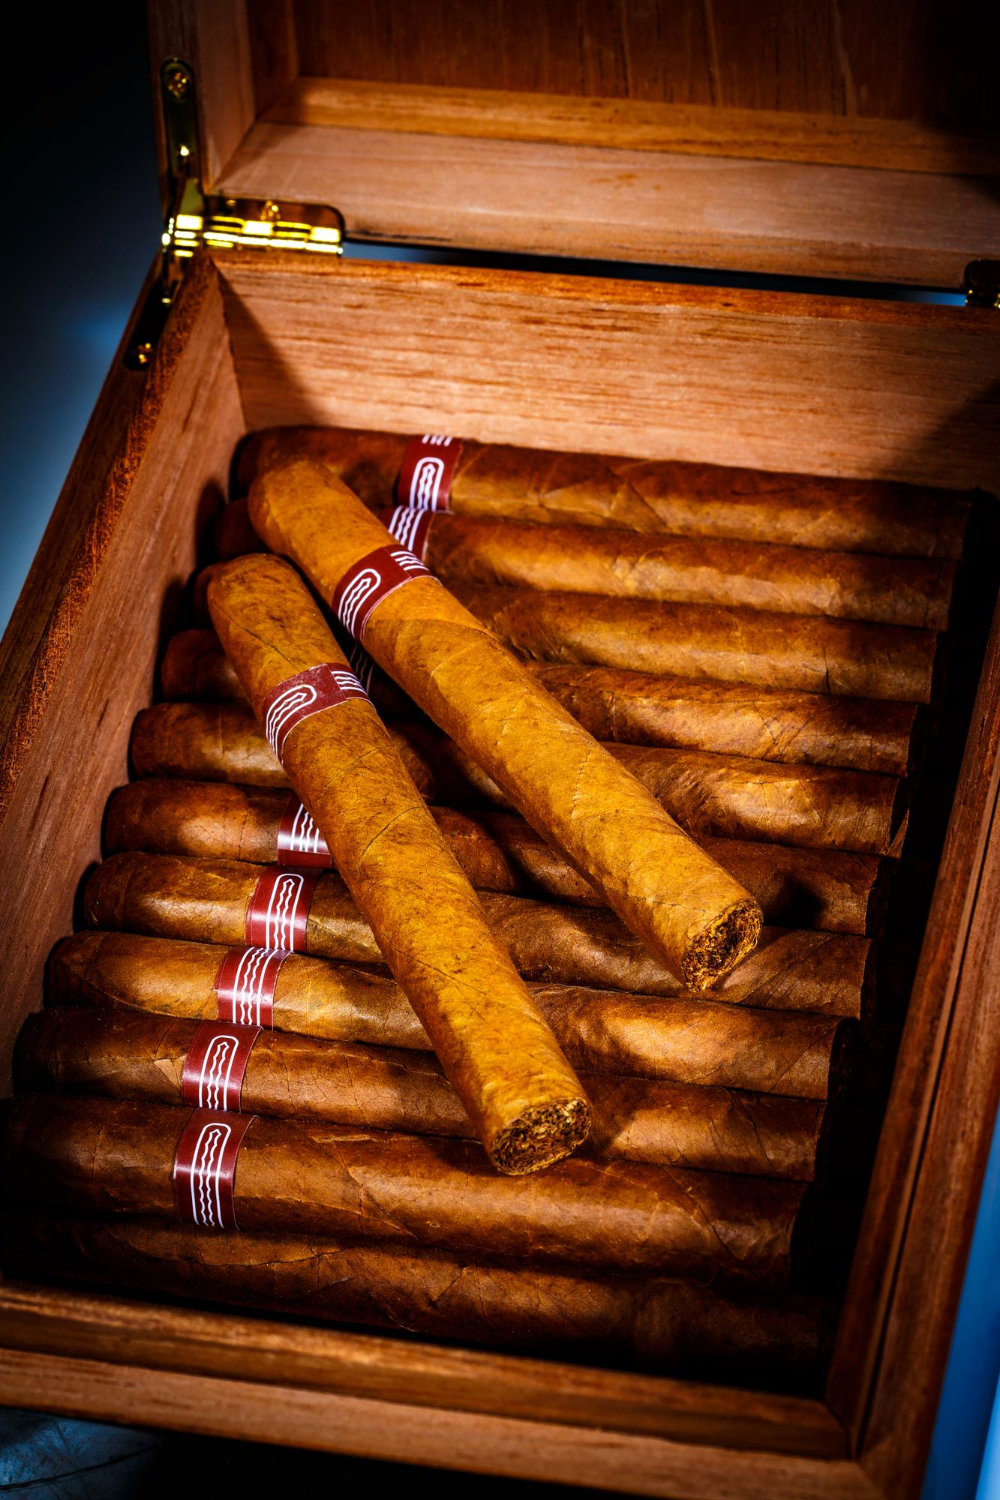 Cigars in their original factory box